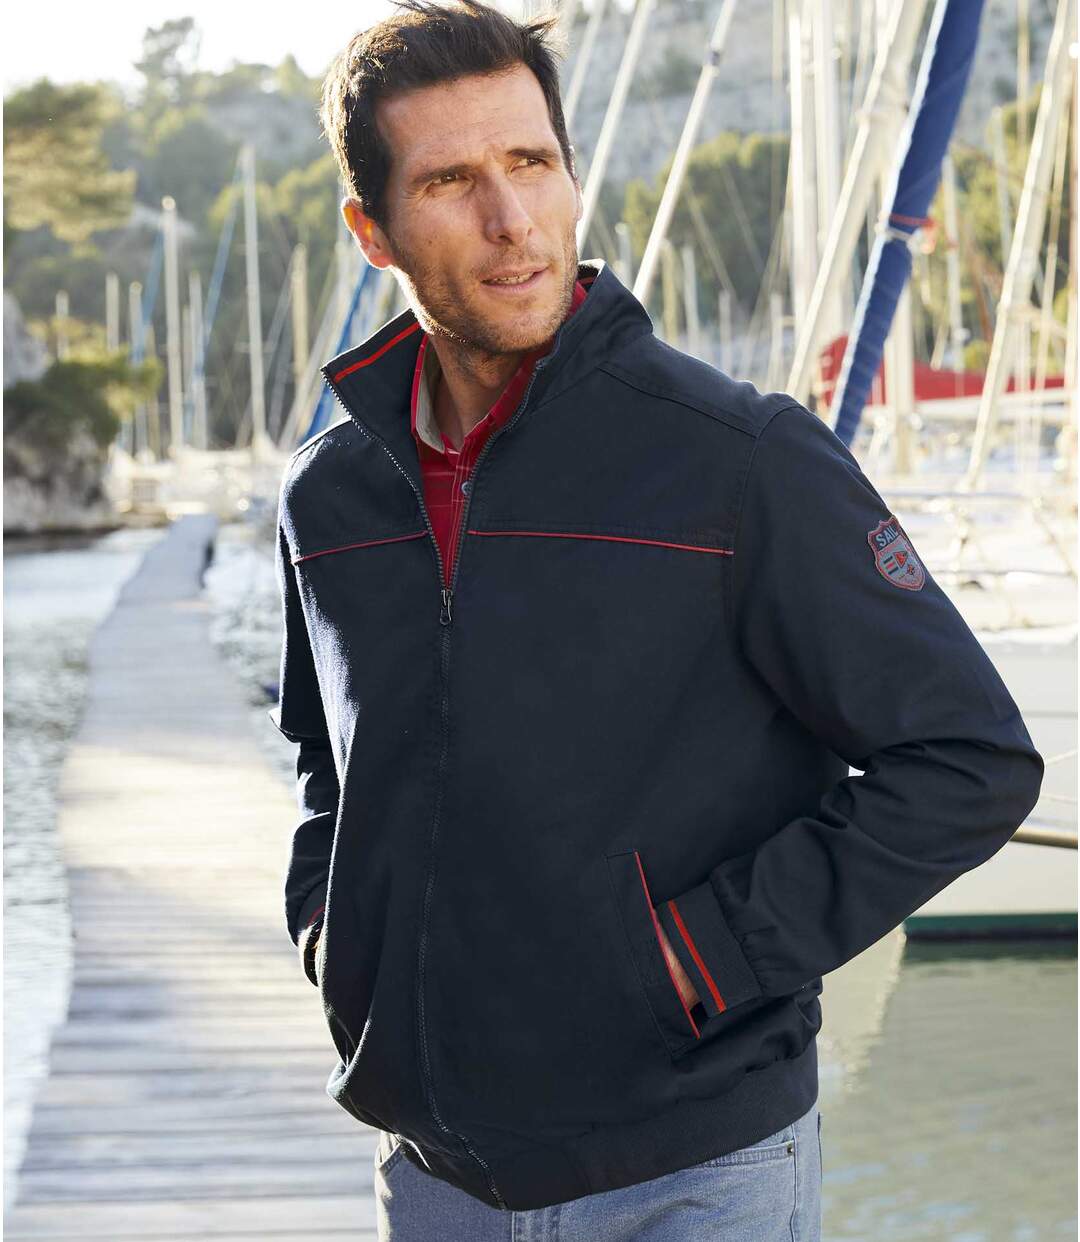 Men's Navy Twill Jacket - Full Zip Atlas For Men